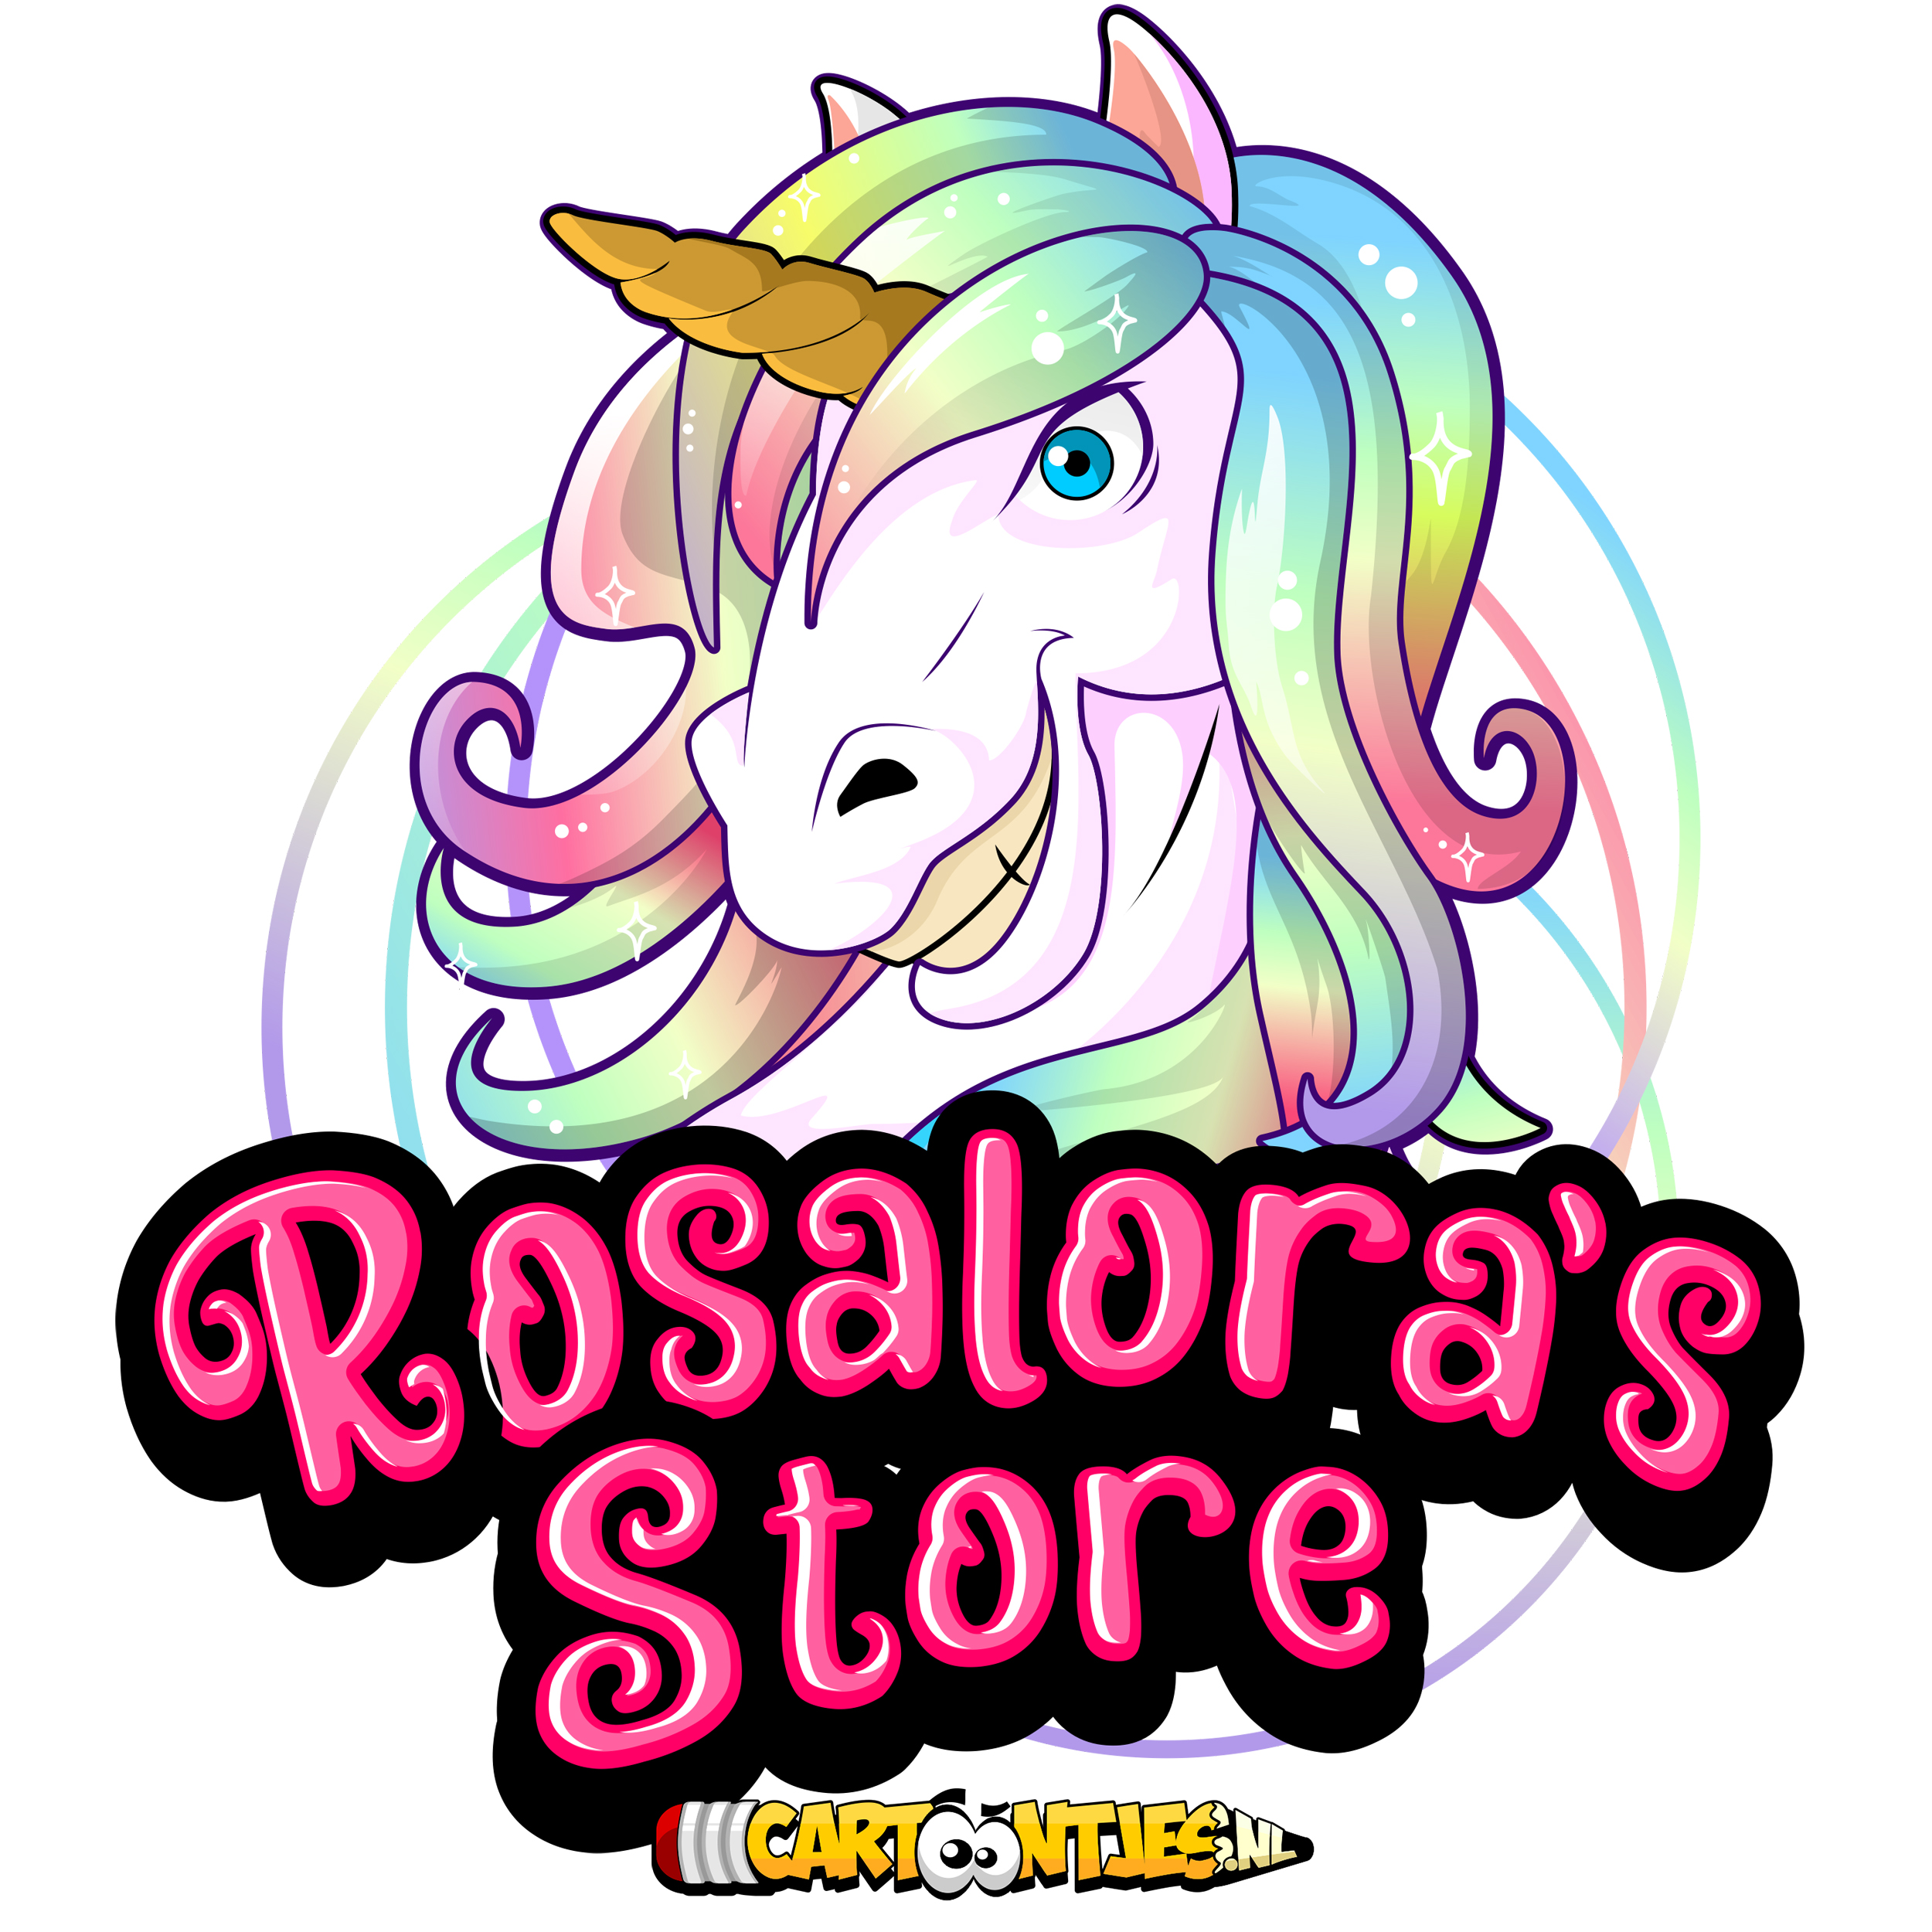 rosalora store logo